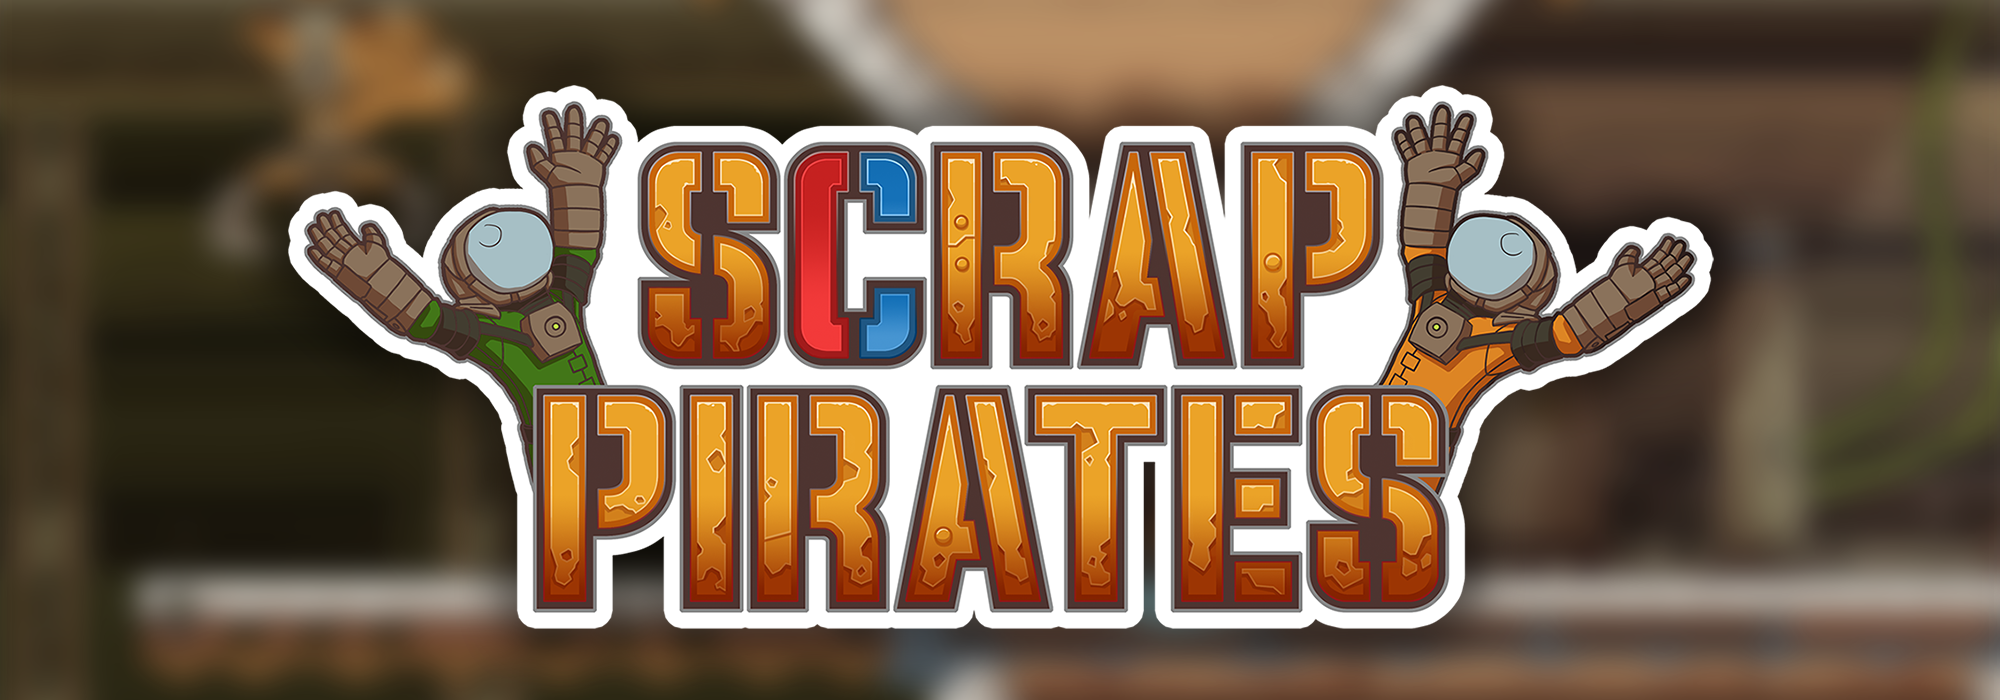 Scrap Pirates